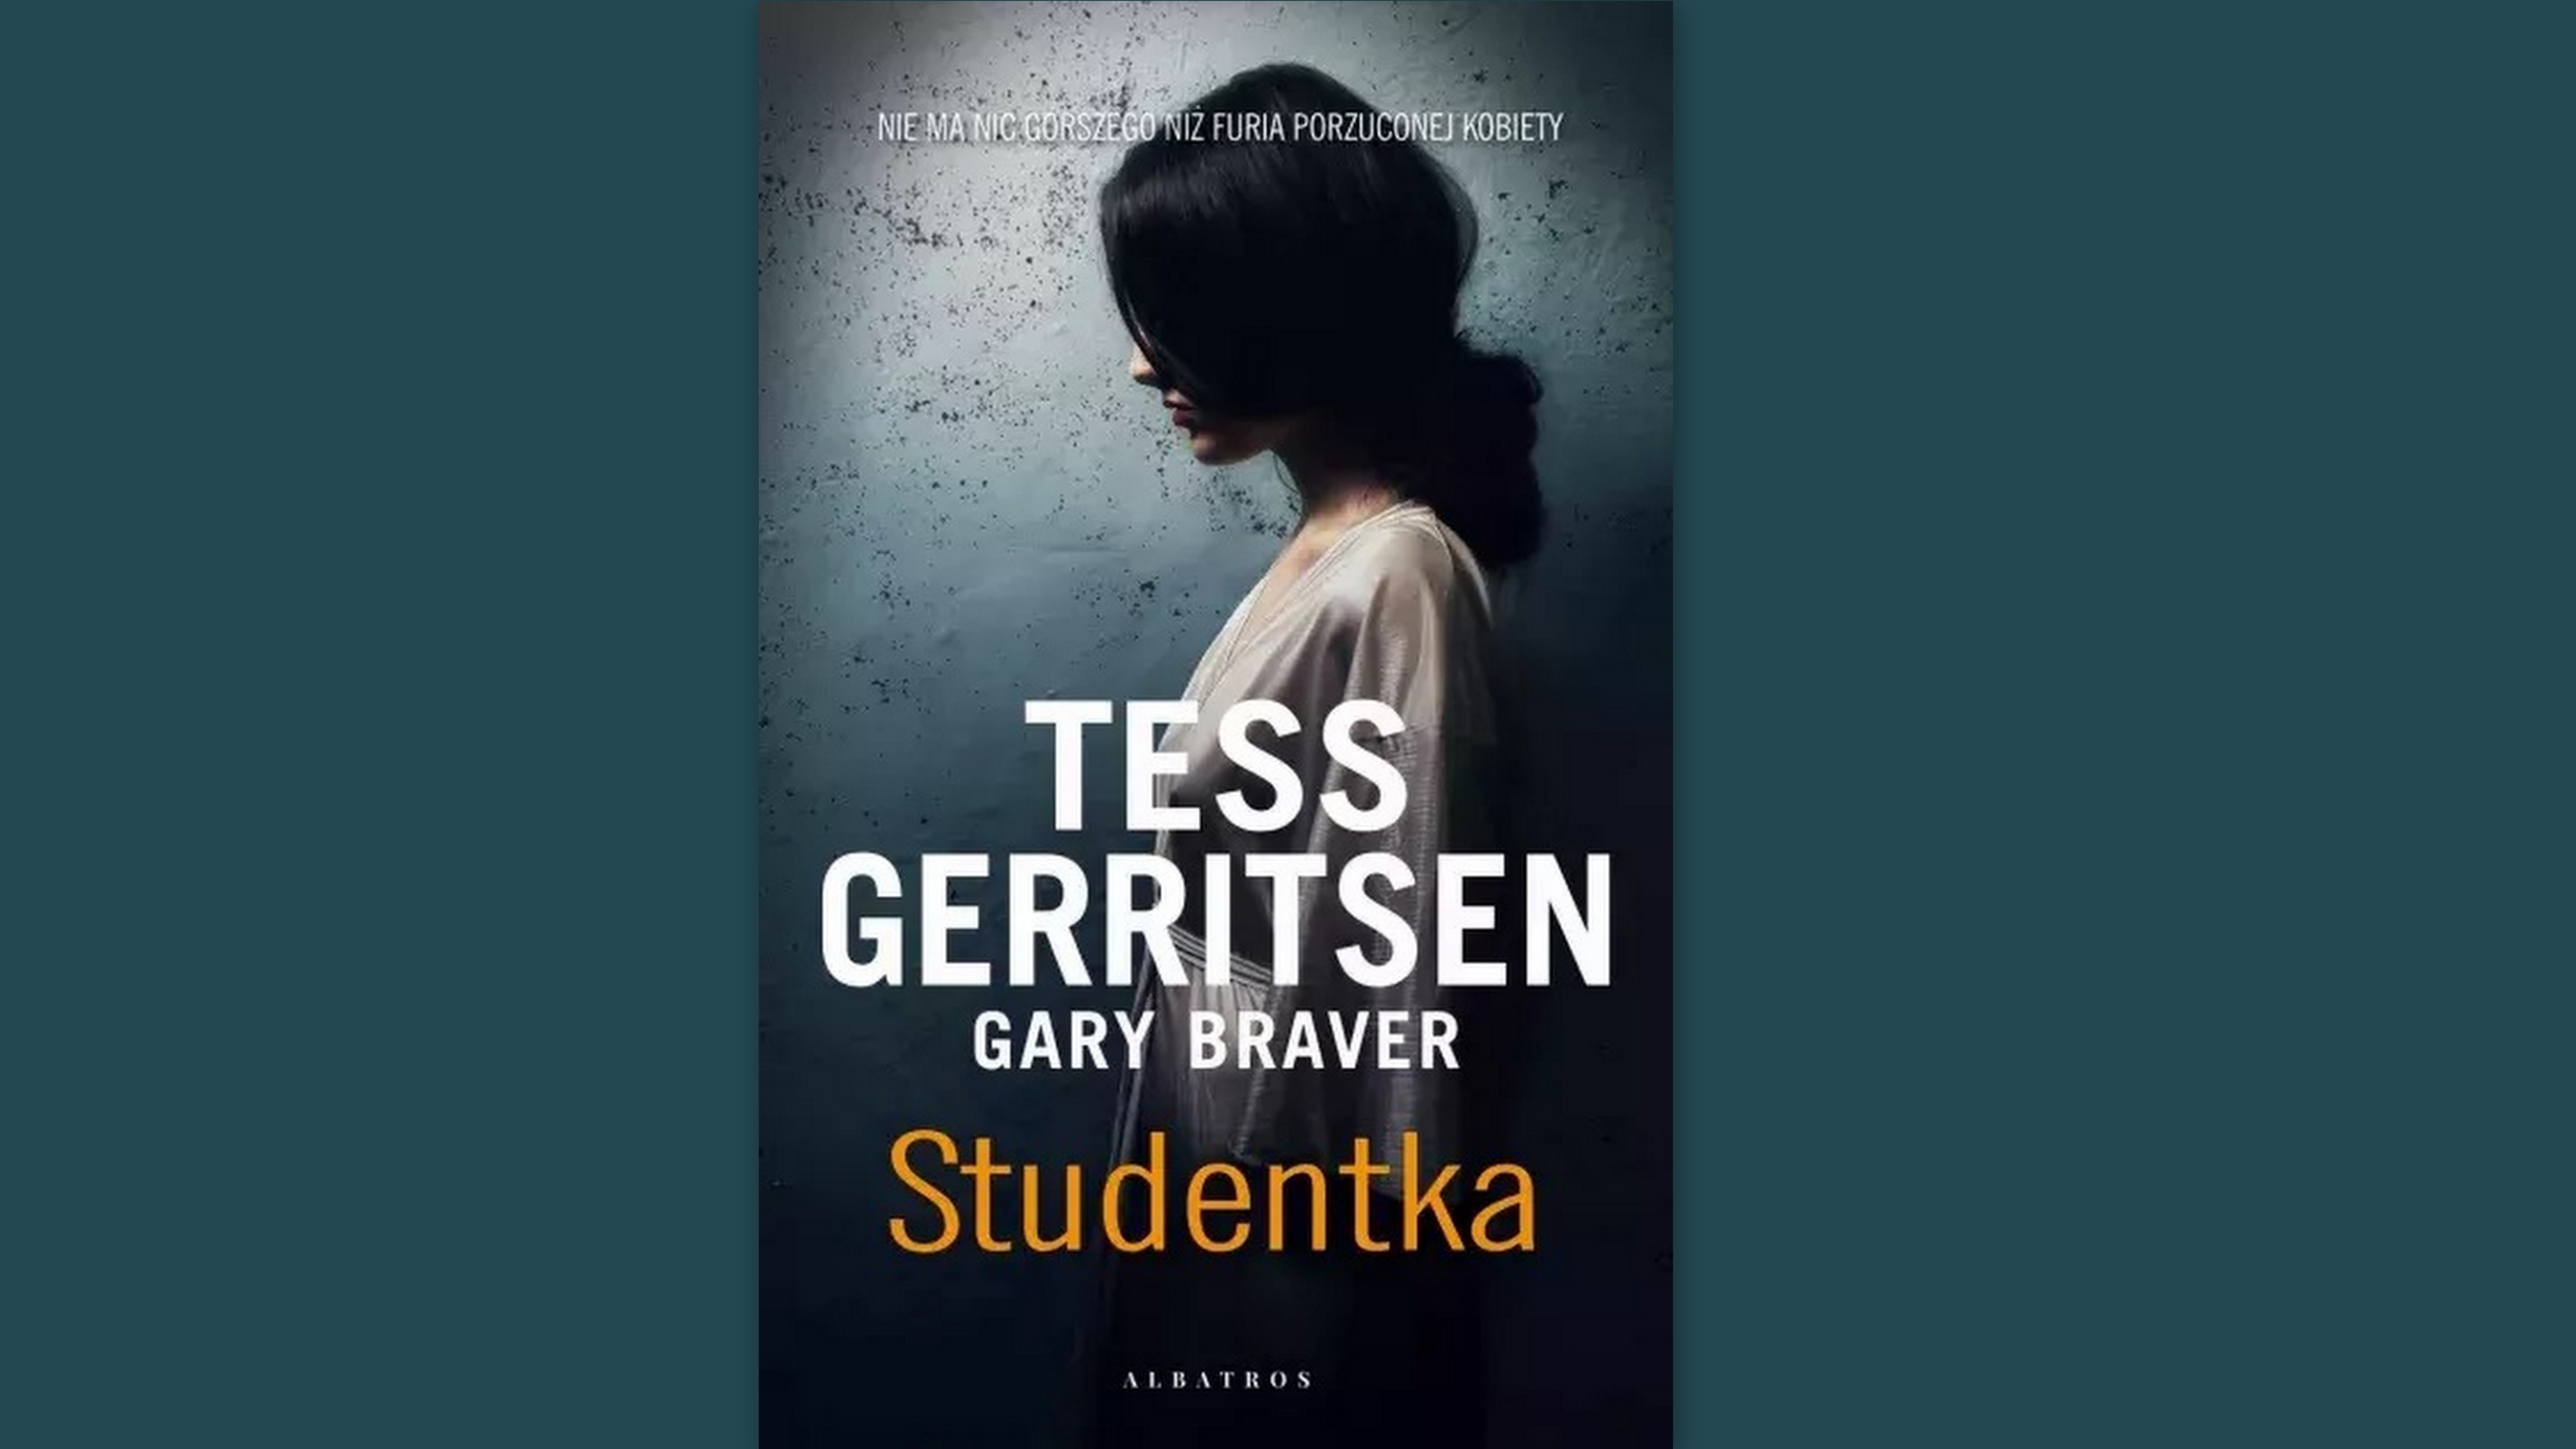 Kącik literacki: Tess Gerritsen Gary Braver - "Studentka" [RECENZJA] - Zdjęcie główne